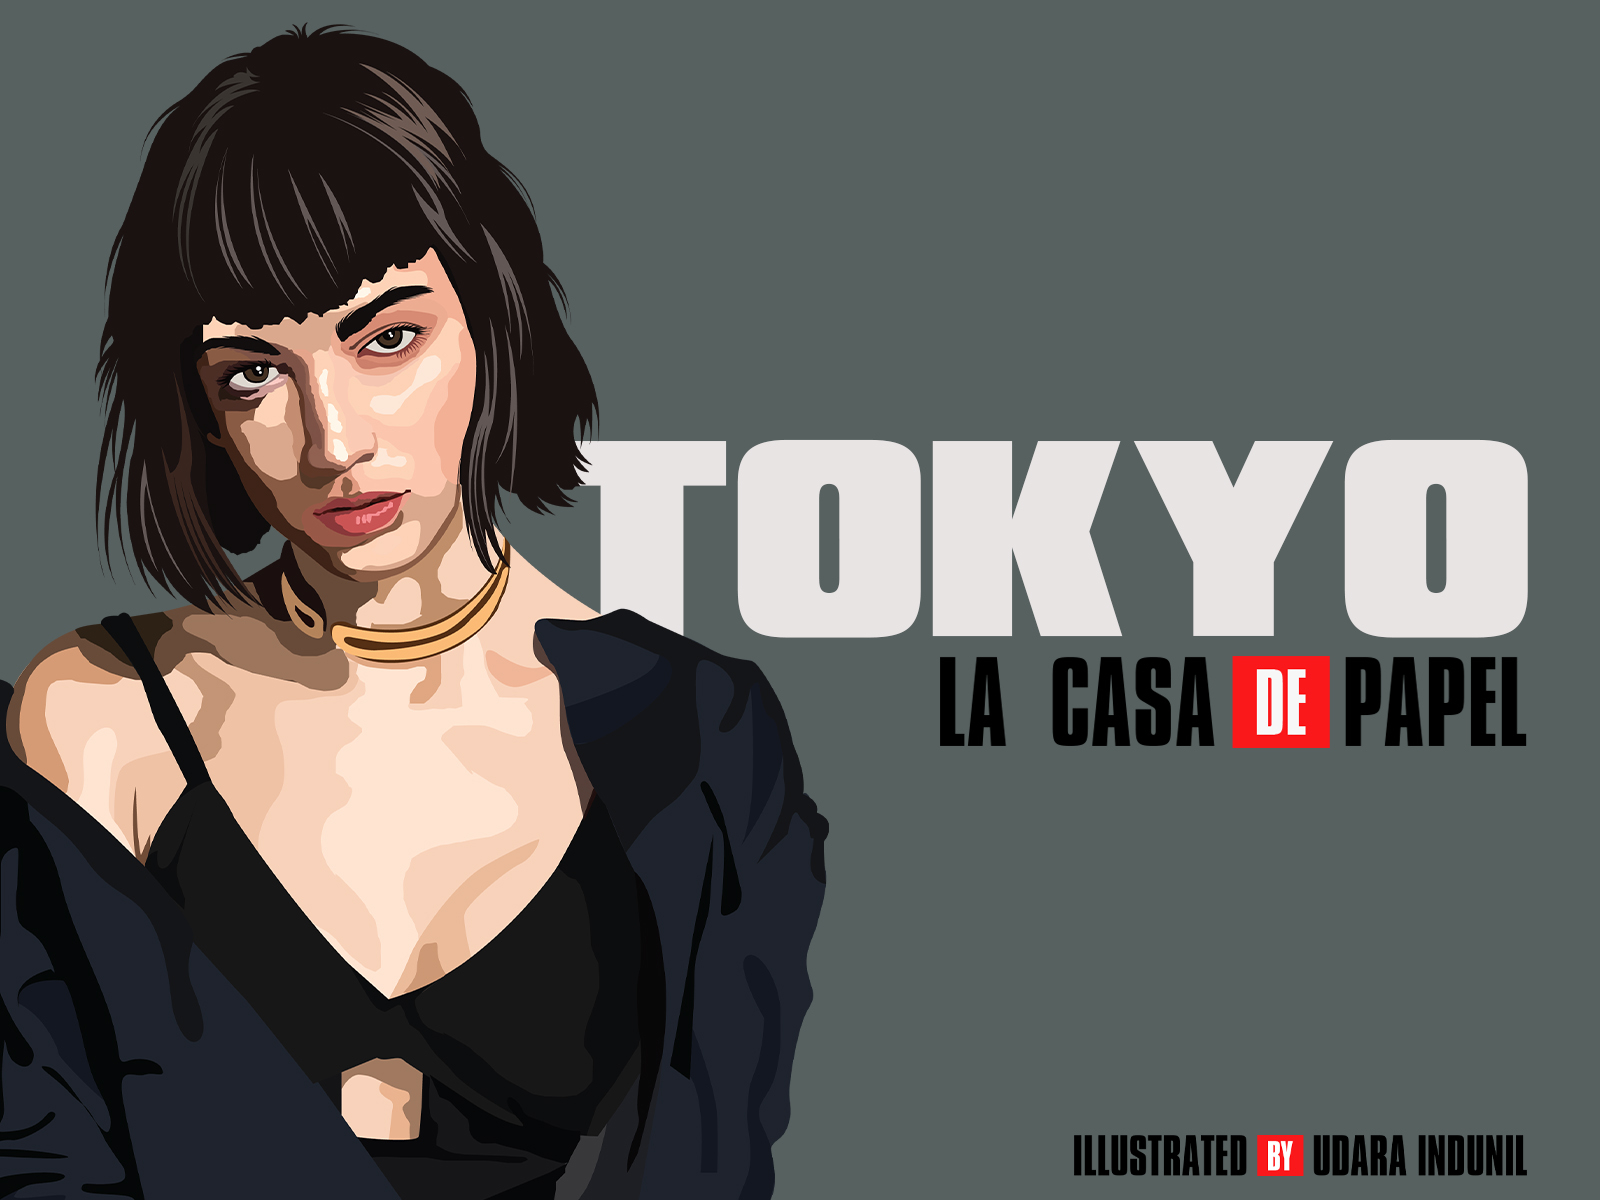 TOKYO - Money Heist Cast Illustration by Udara Jayasanka on Dribbble